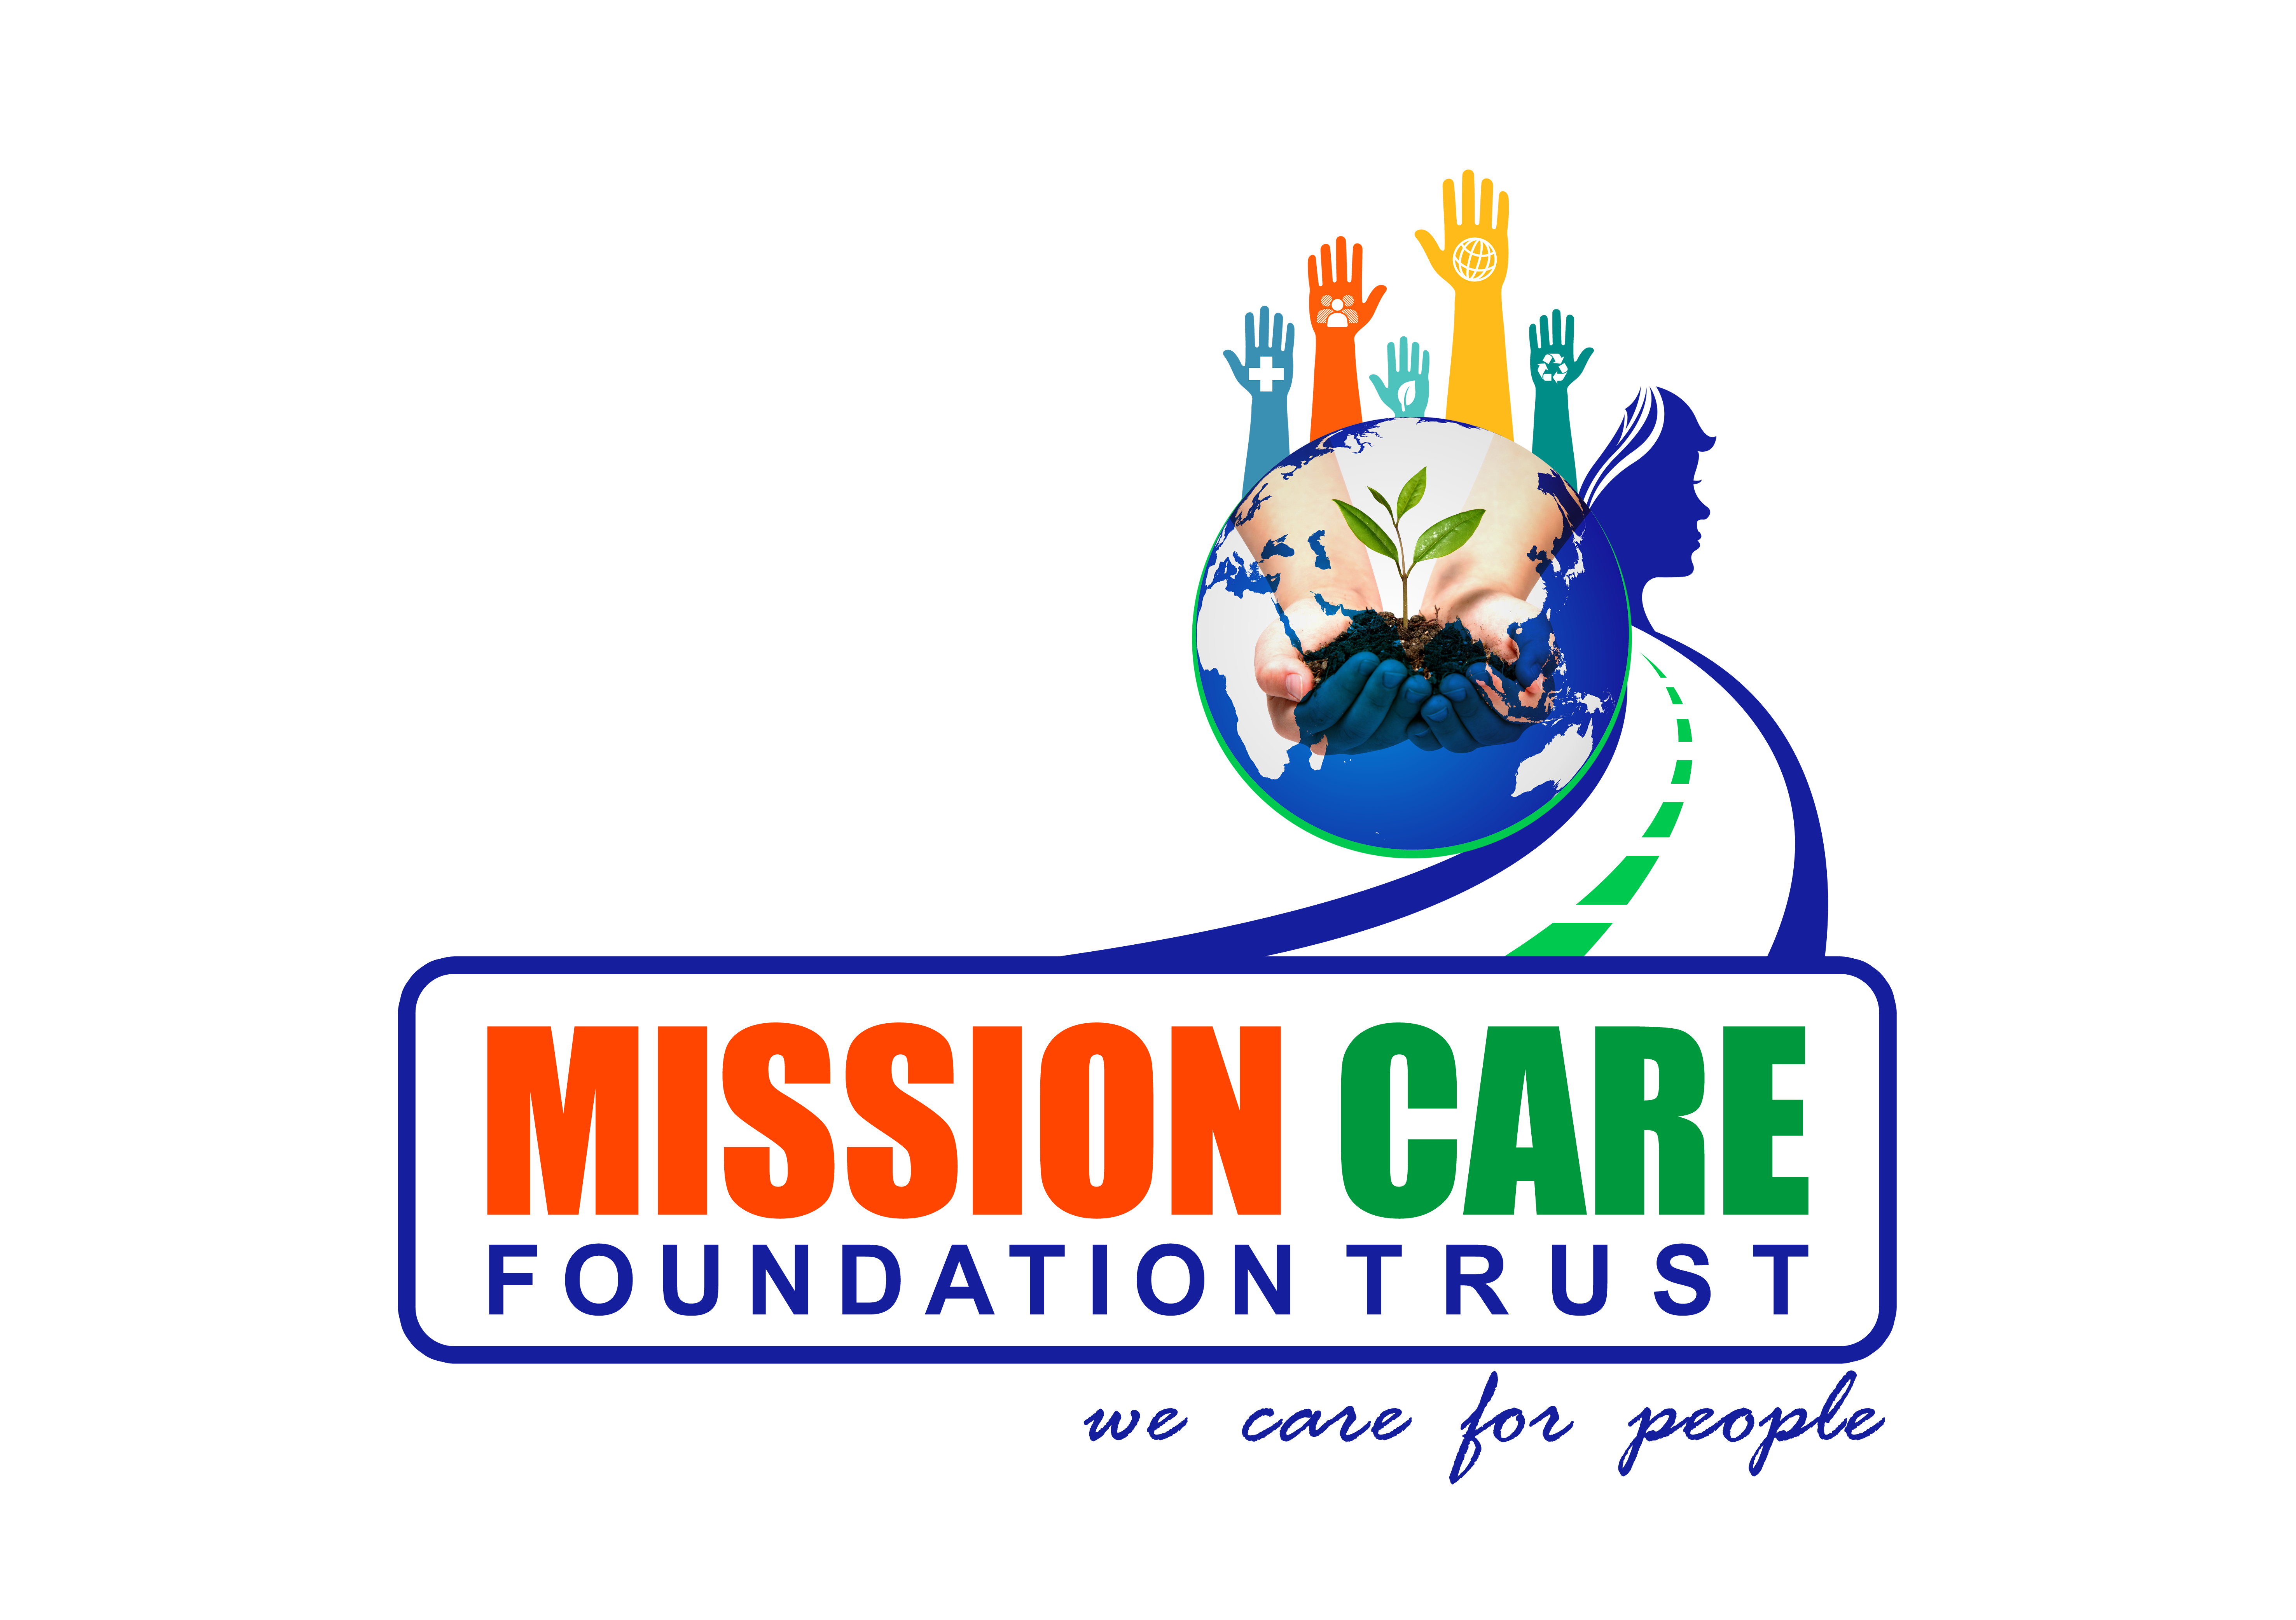 Mission Care Foundation Trust